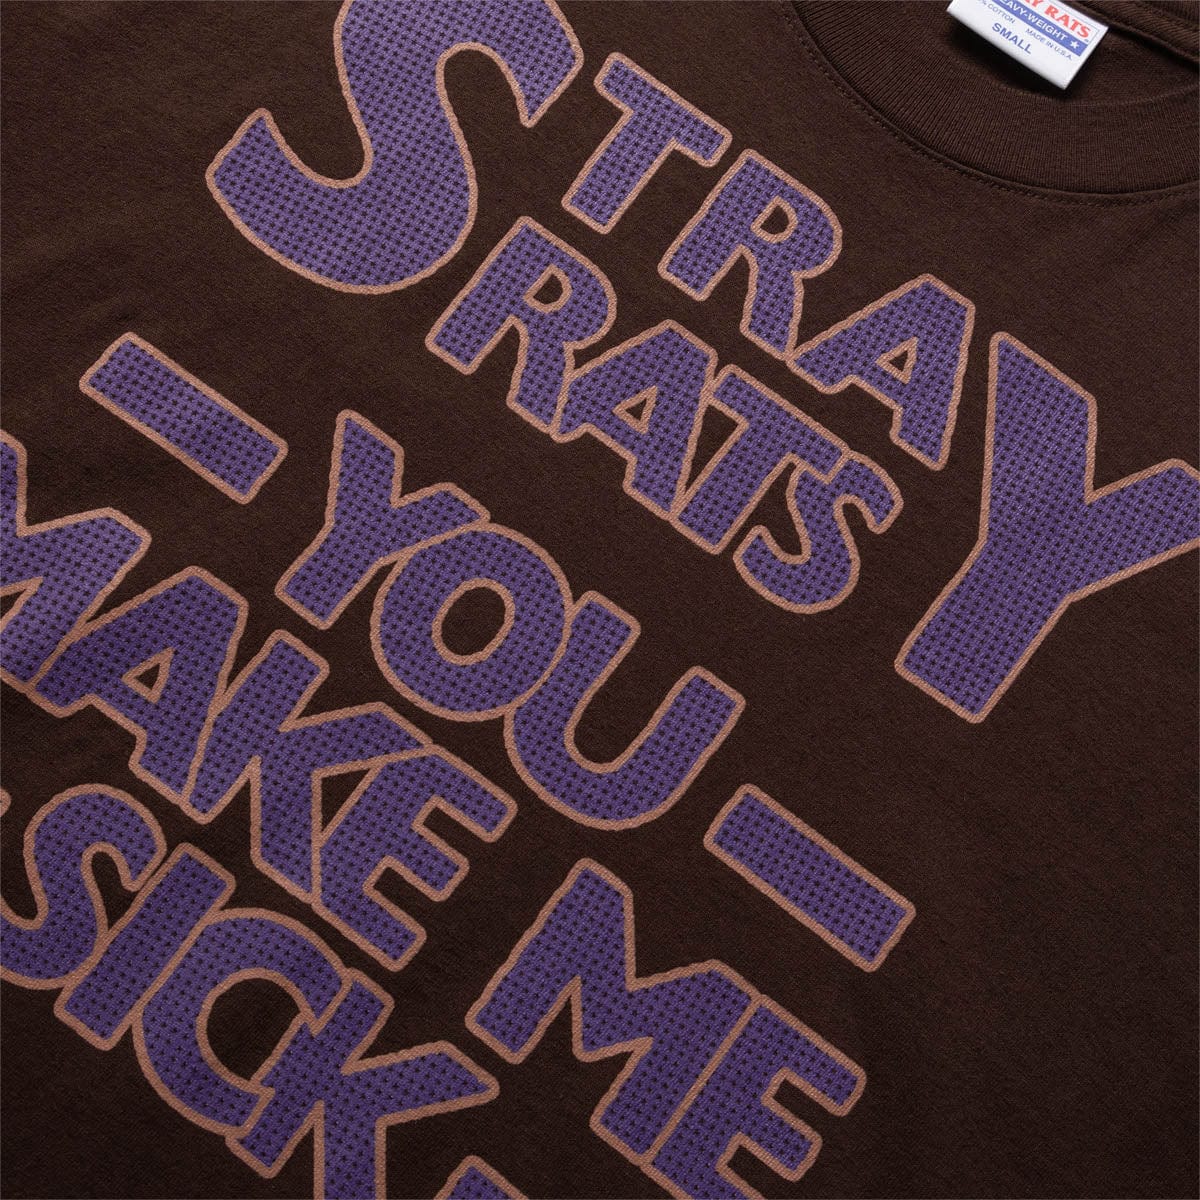 Stray Rats T-Shirts YOU MAKE ME SICK T-SHIRT